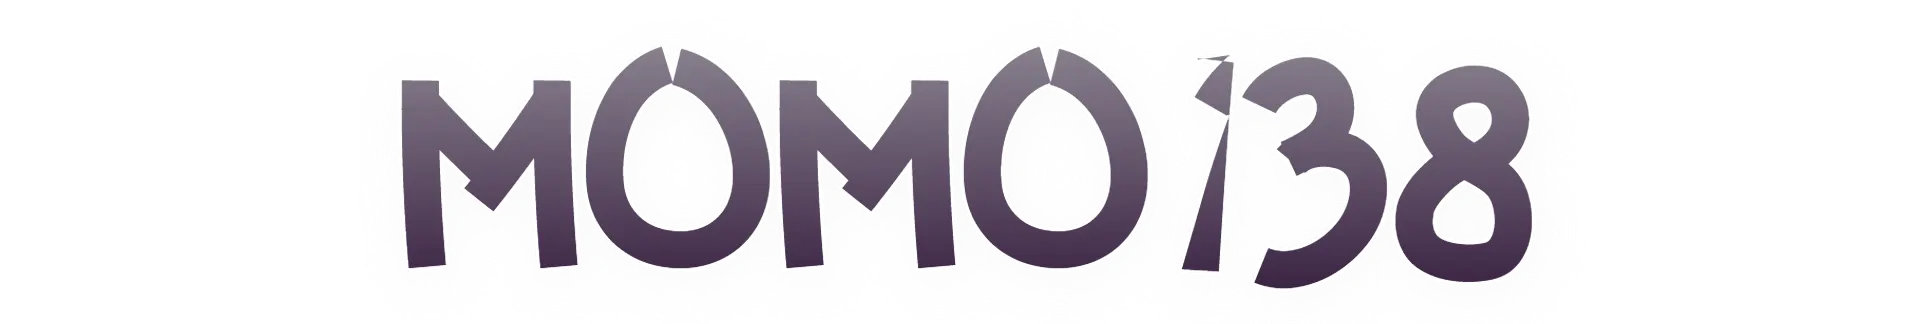 MOMO138